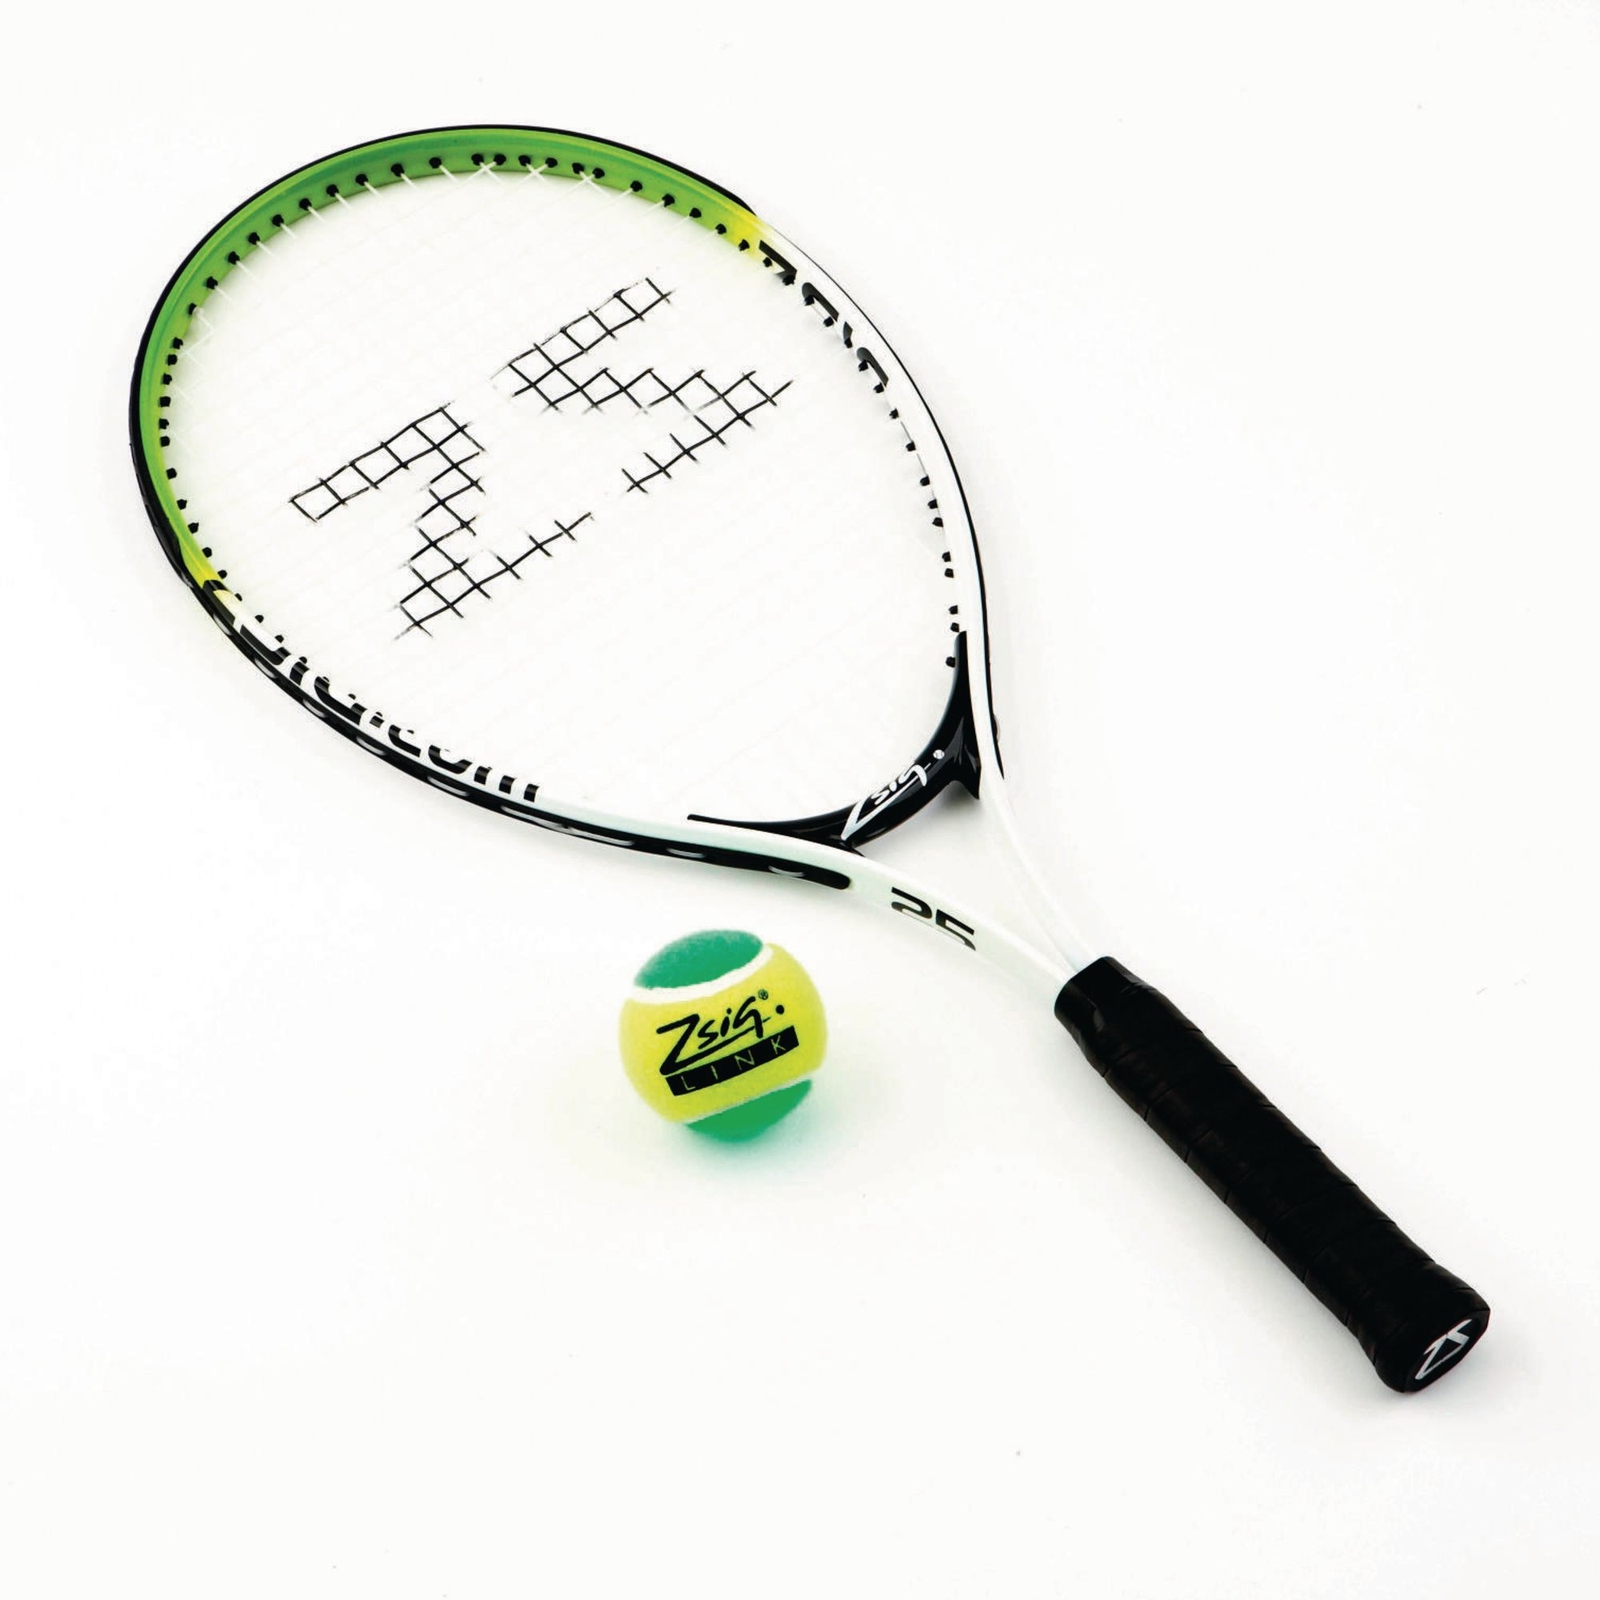 Zsig Tennis Racket - Green - 25in - Each